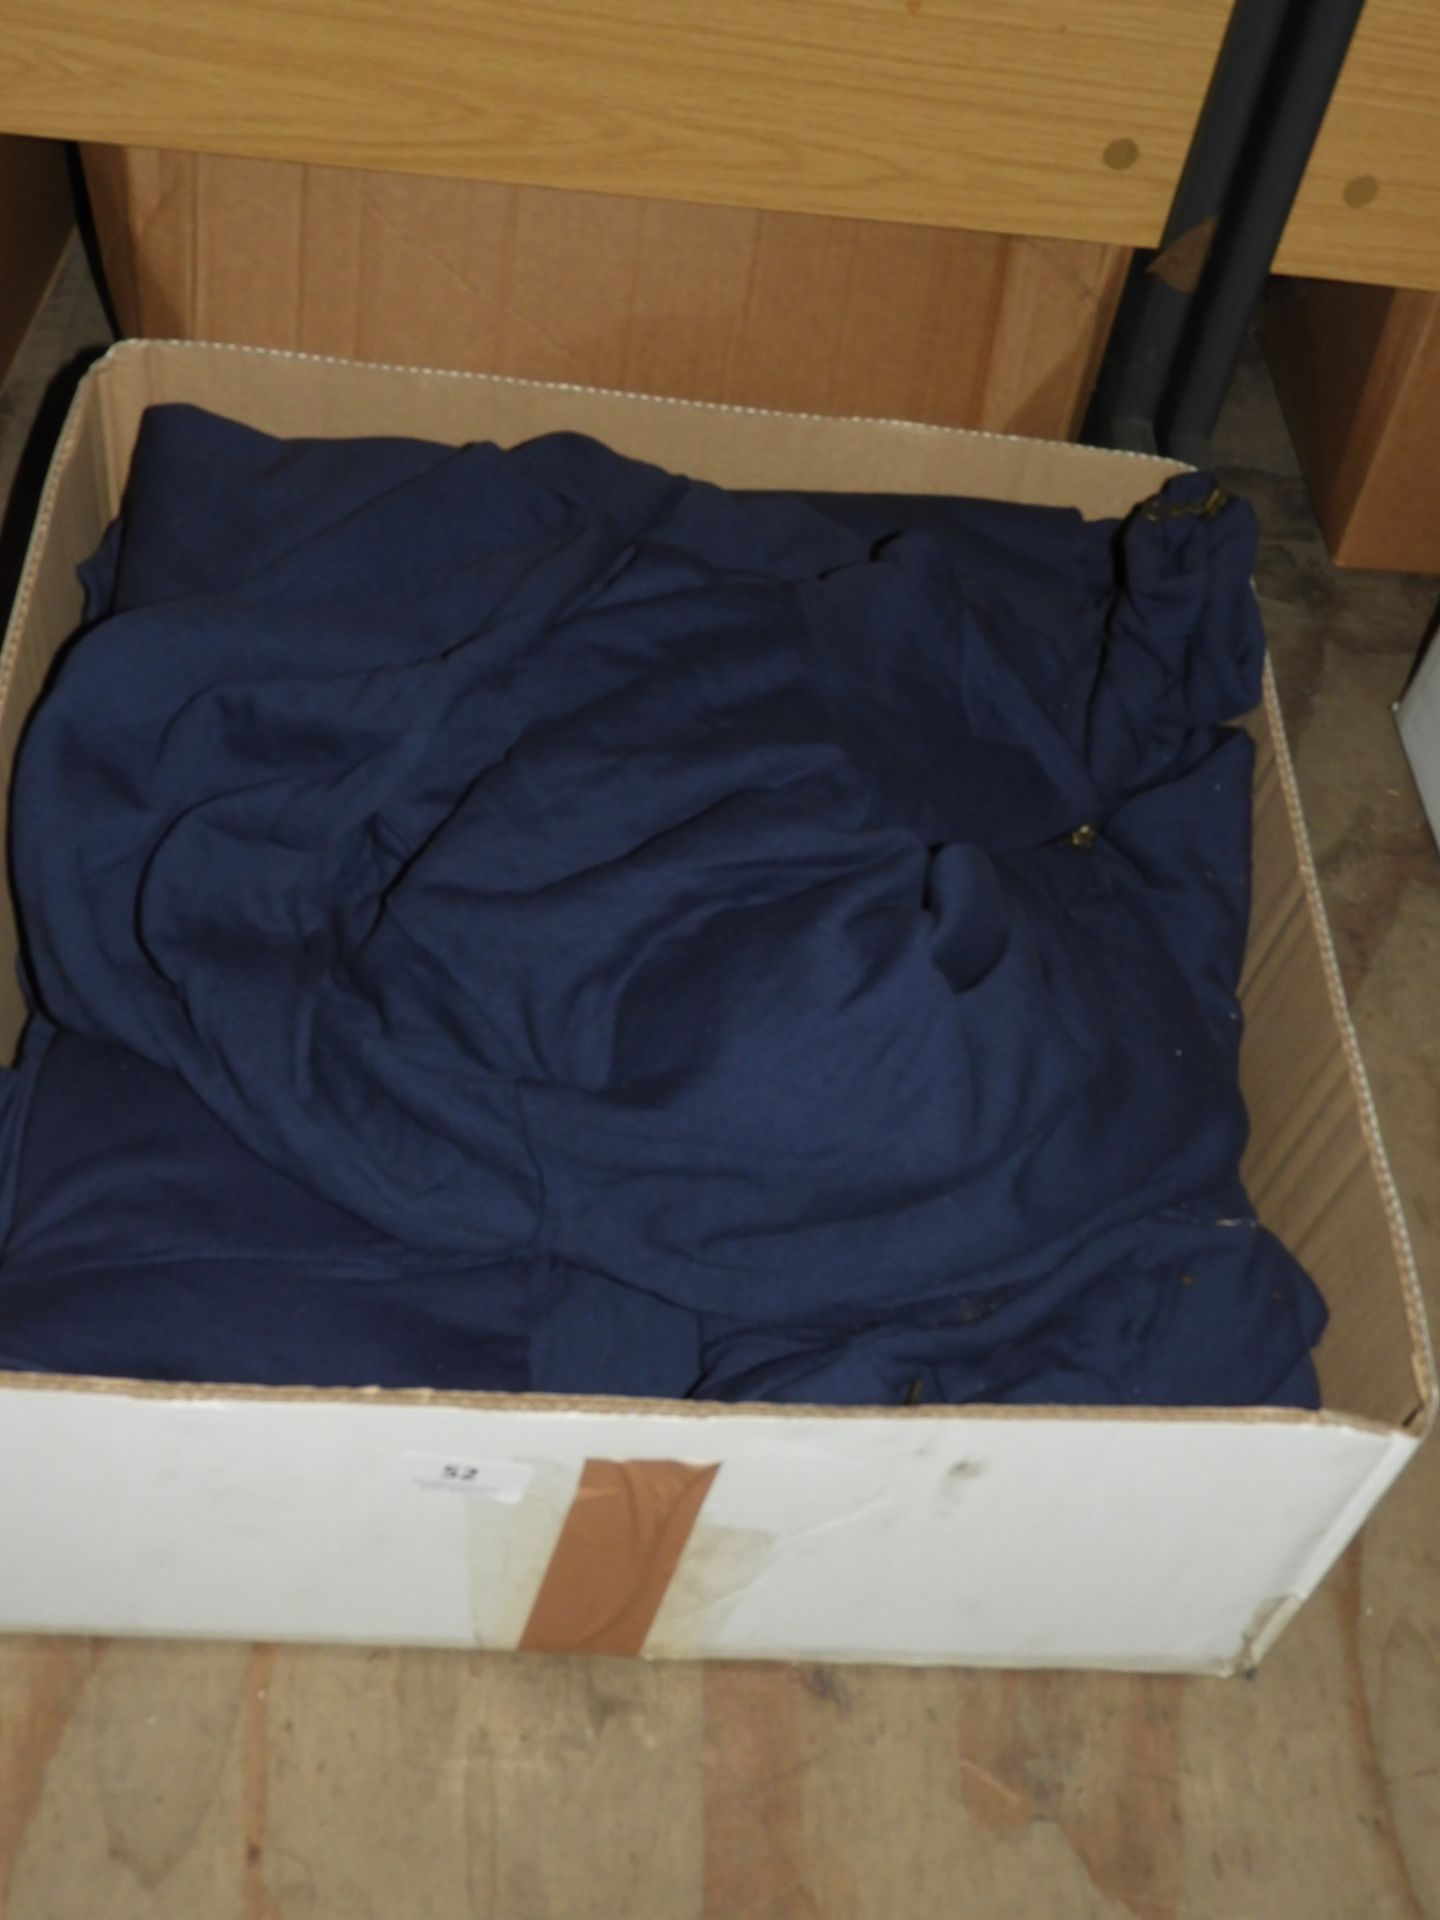 Box of 10 Navy Blue Sweatshirts and Hoodie Tops